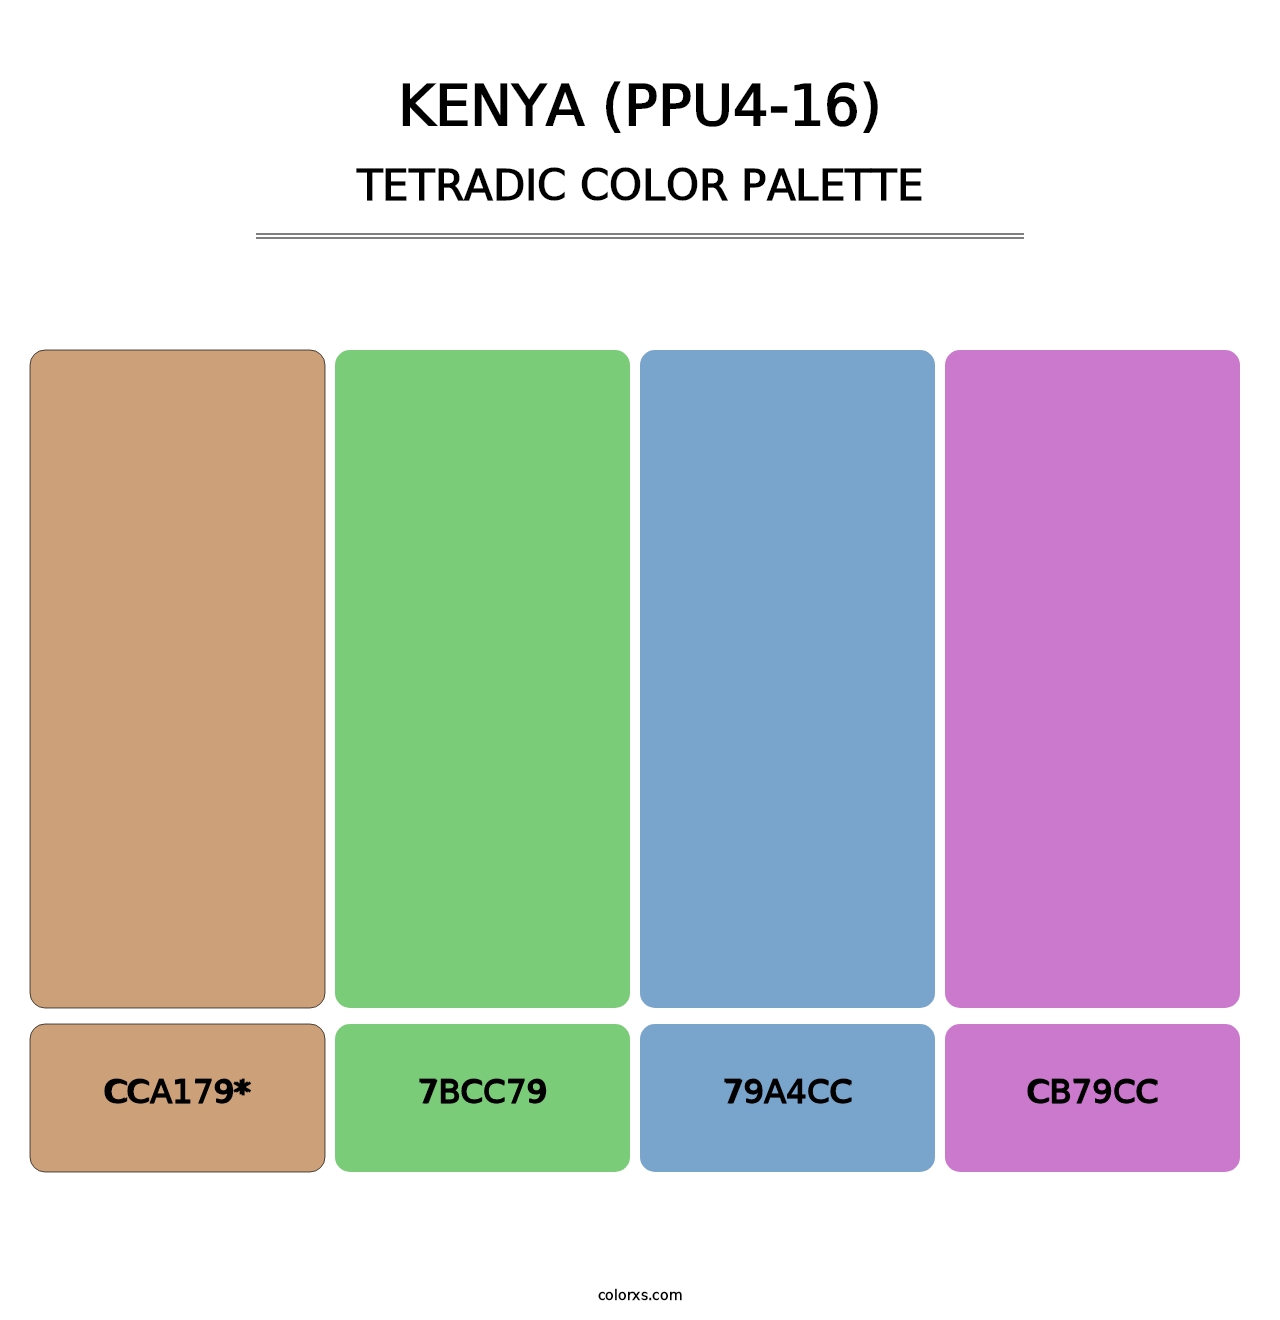 Kenya (PPU4-16) - Tetradic Color Palette